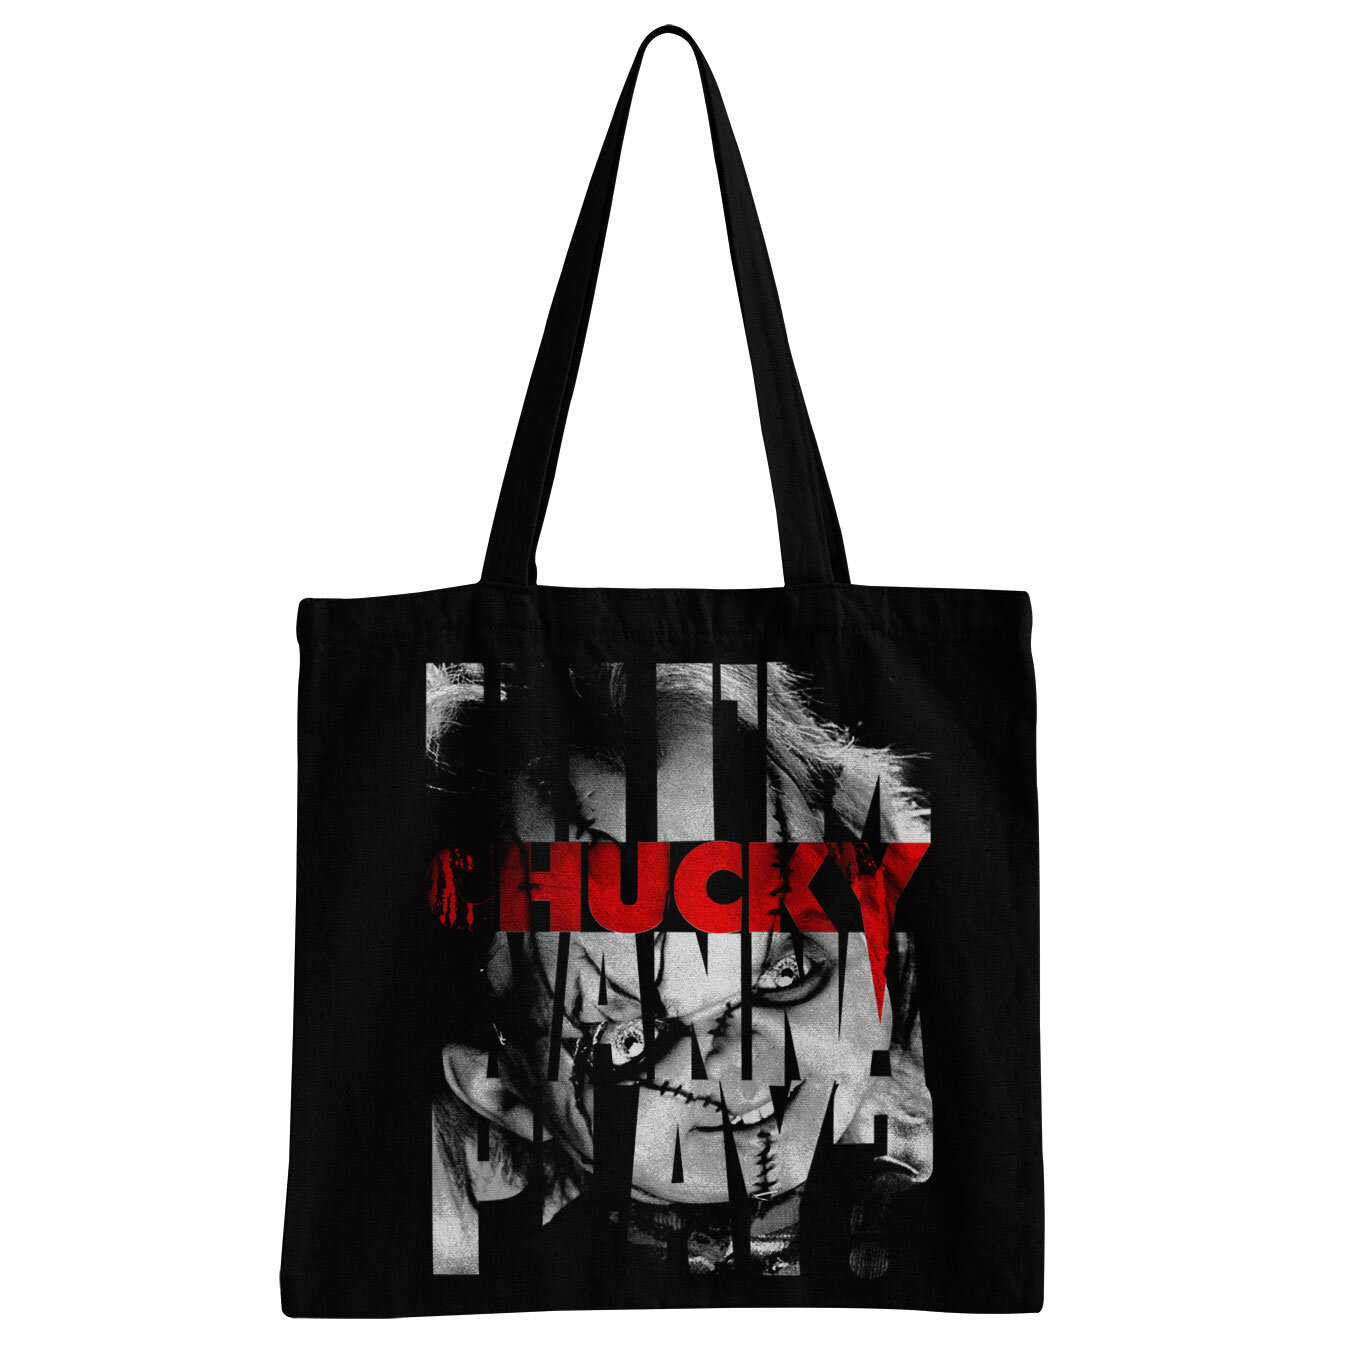 Chucky - Wanna Play Cutout Tote Bag